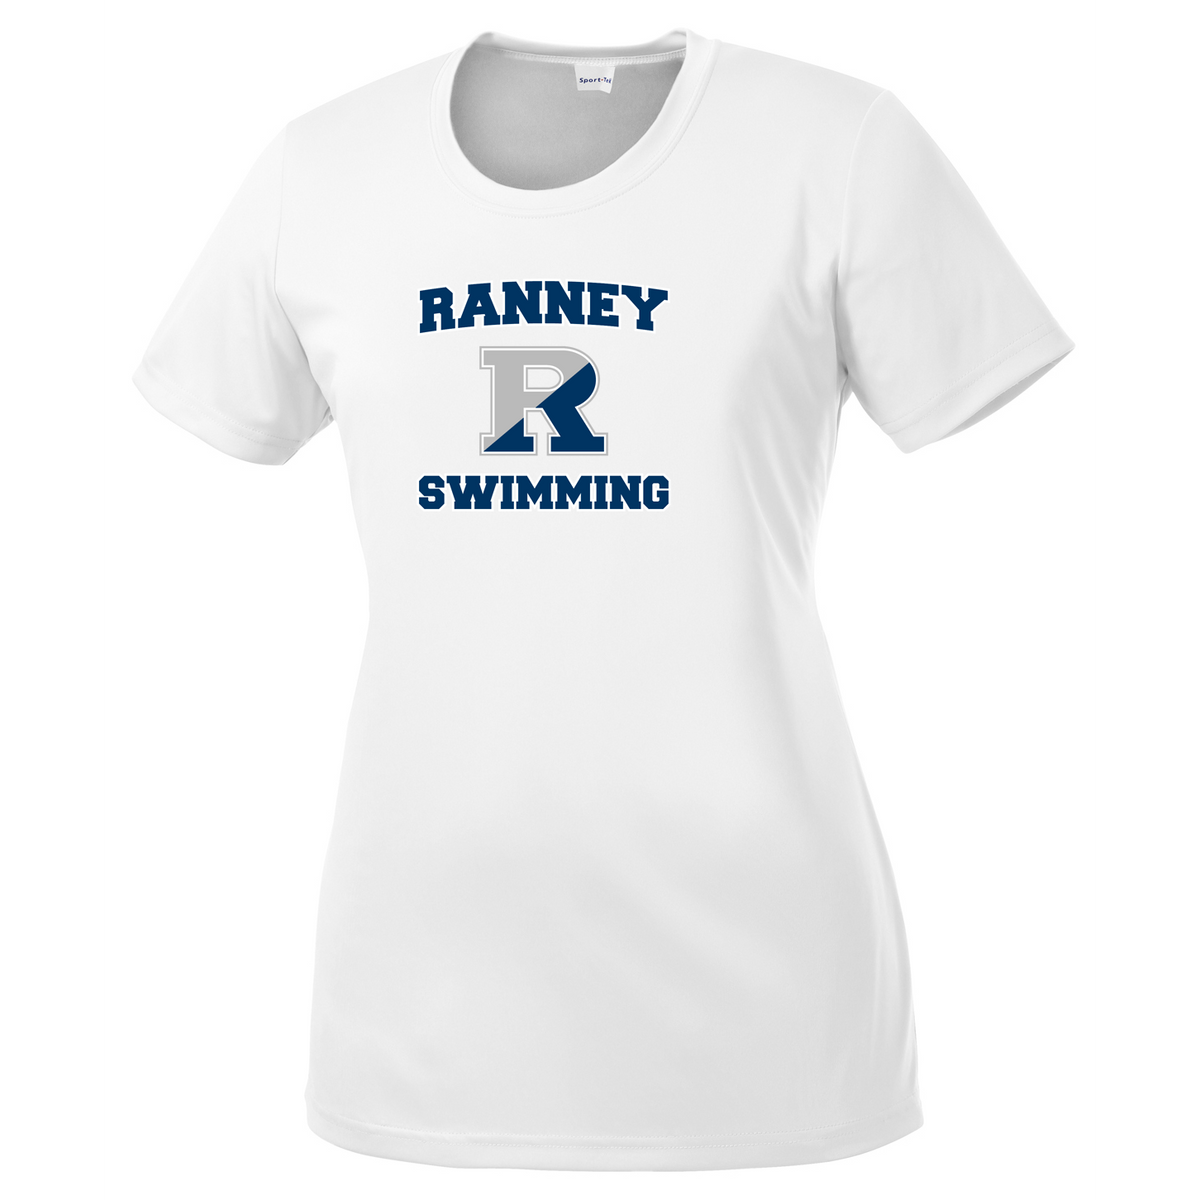 Ranney Swimming Women's Performance Tee